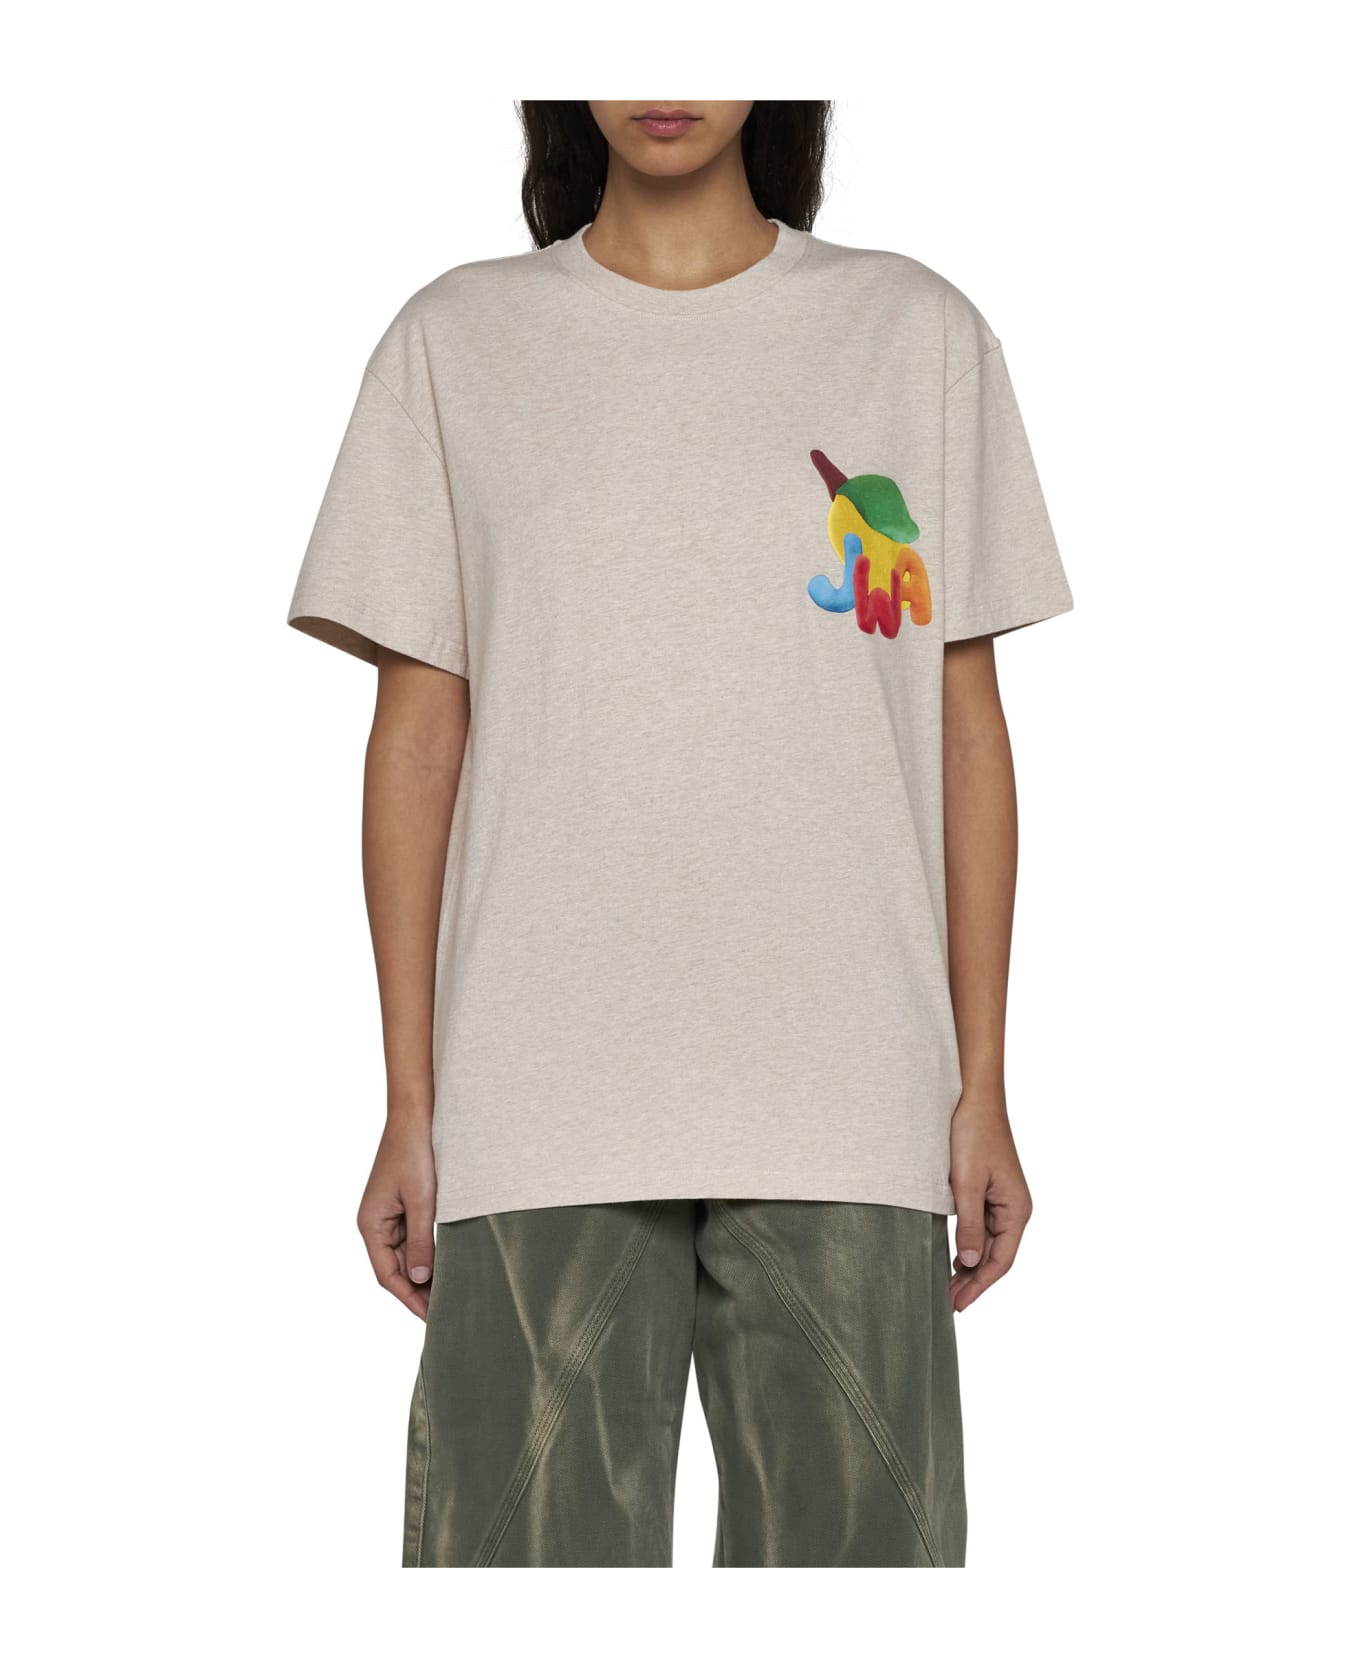 J.W. Anderson T-Shirt - Oatmeal melange Tシャツ